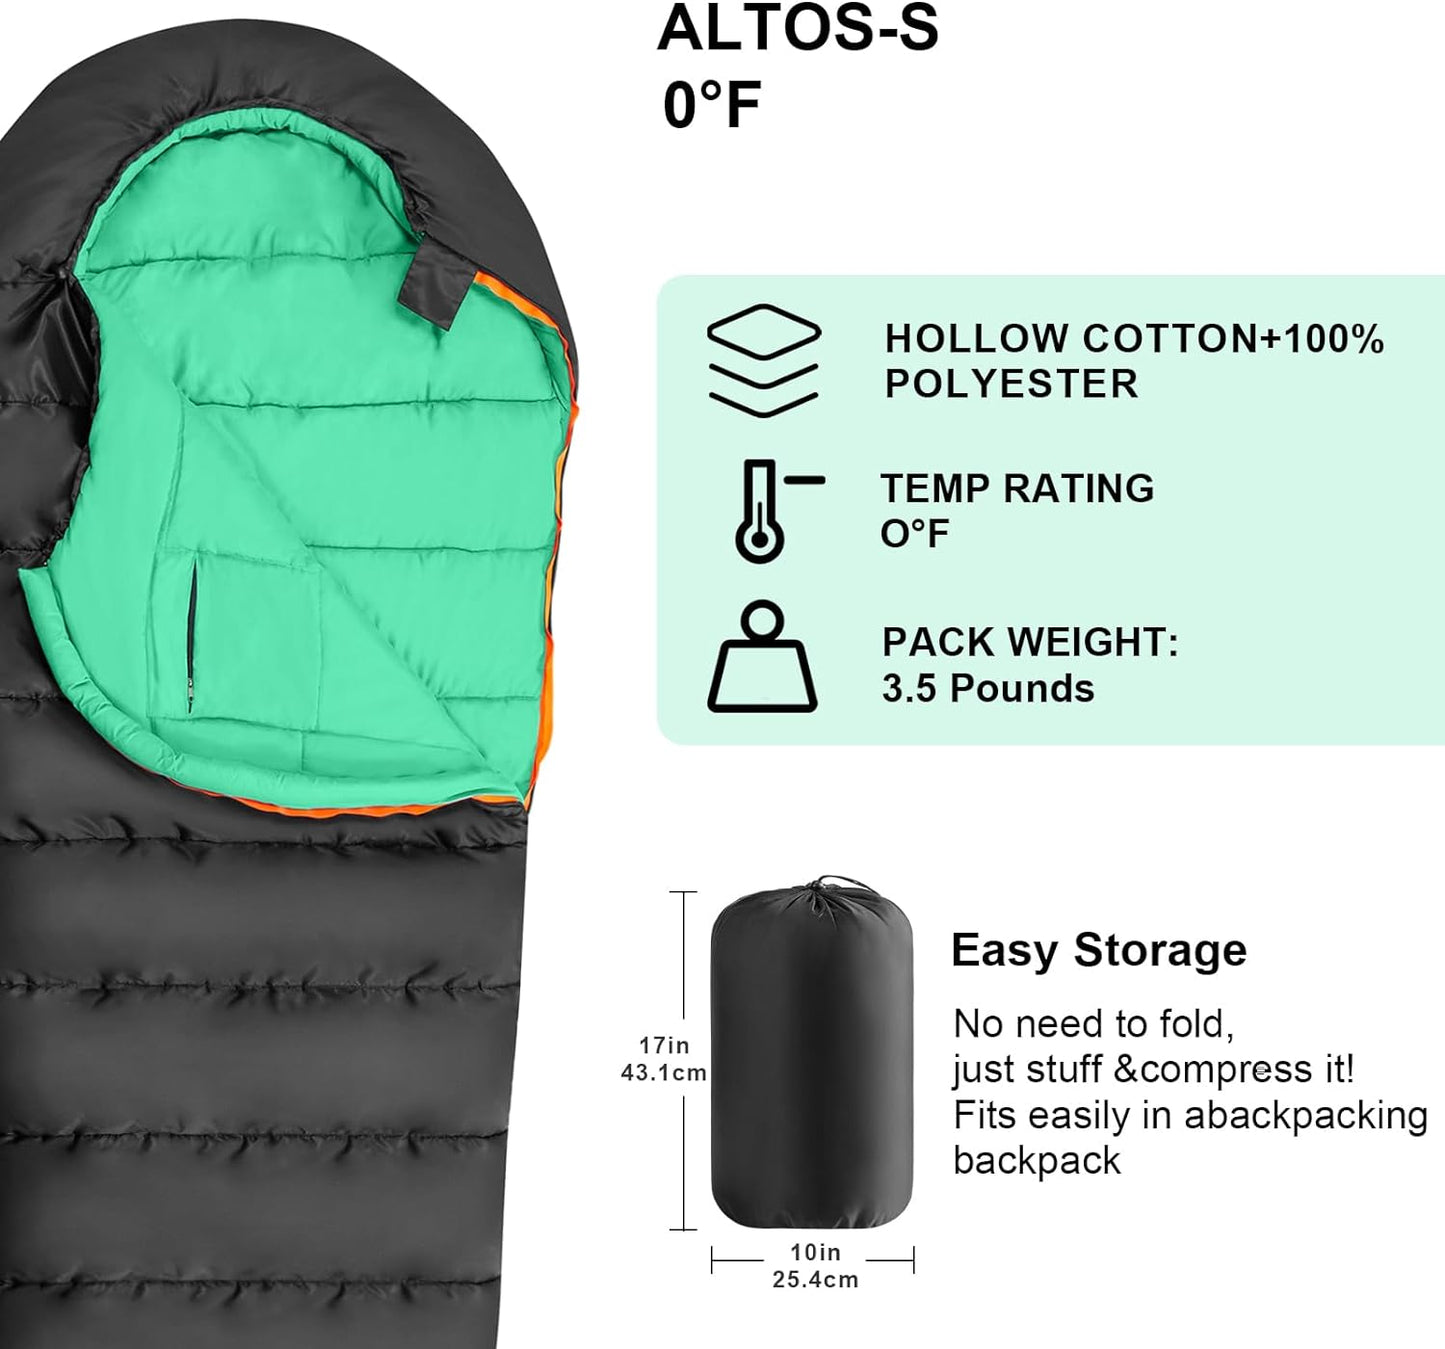 Sleeping Bag,Camping Sleeping Bags for Adults 3-4 Seasons Cold Warm Weather Waterproof Lightweight,Mummy Camping Sleeping Bag for Backpacking Hiking Travel Indoor Outdoor Use.